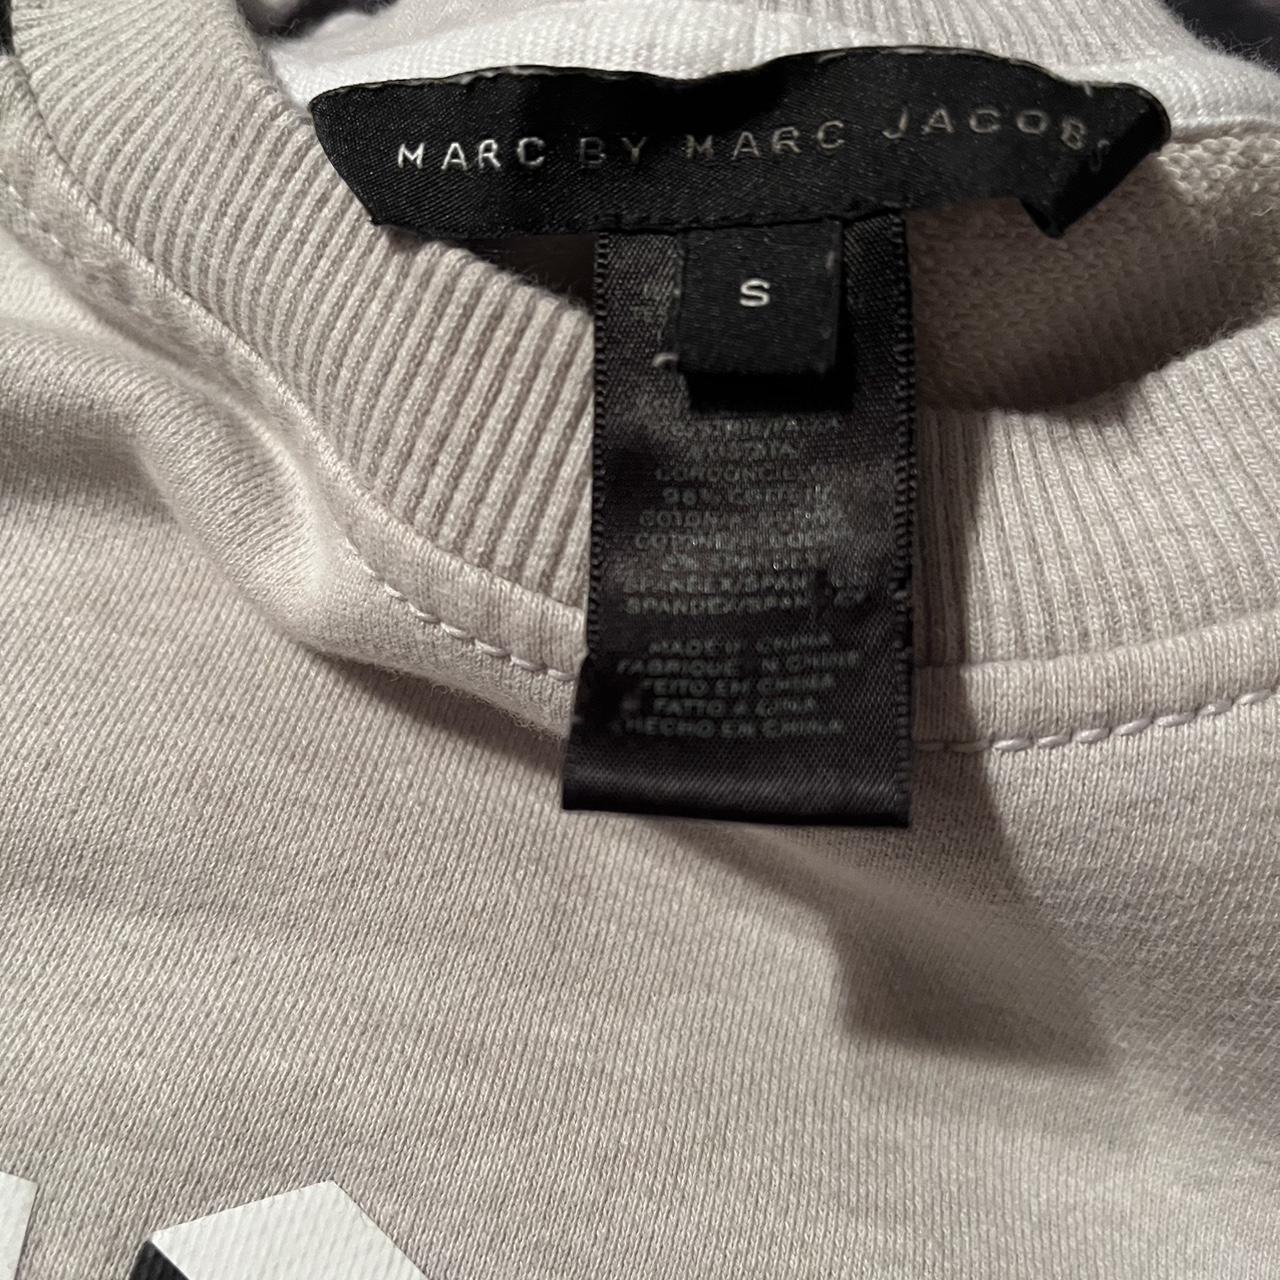 Marc by Marc Jacobs Men's Cream and Black Sweatshirt (2)